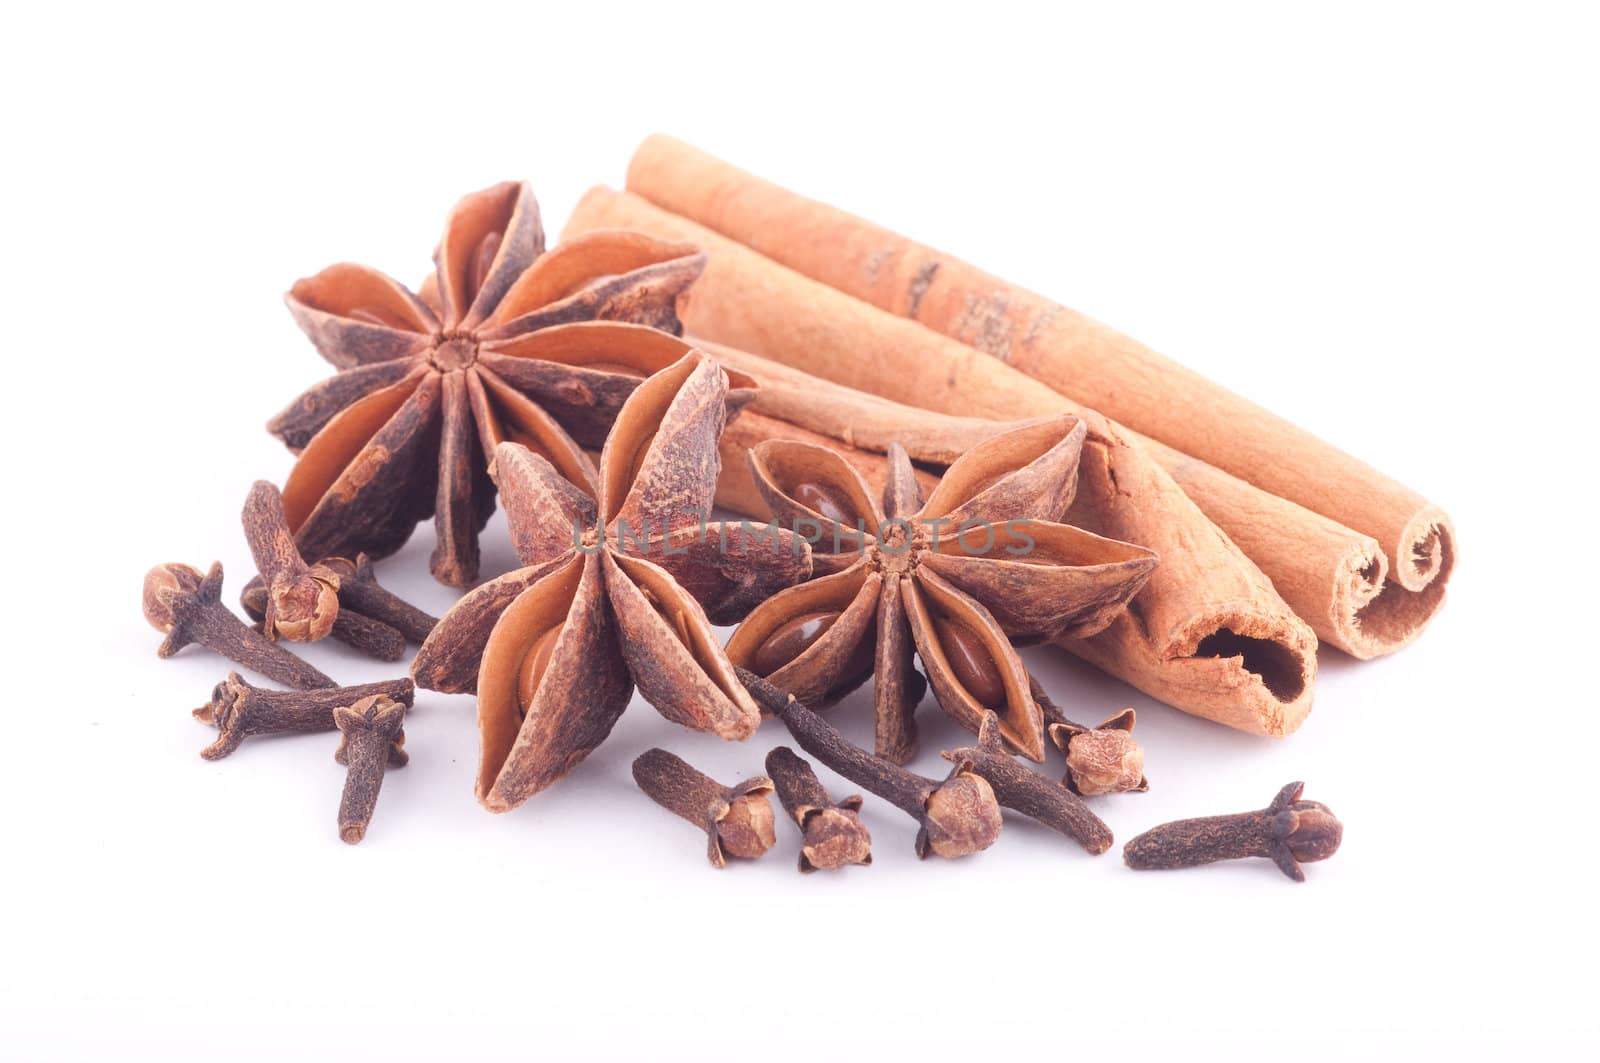 Cinnamon sticks, star anise and cloves by Rainman